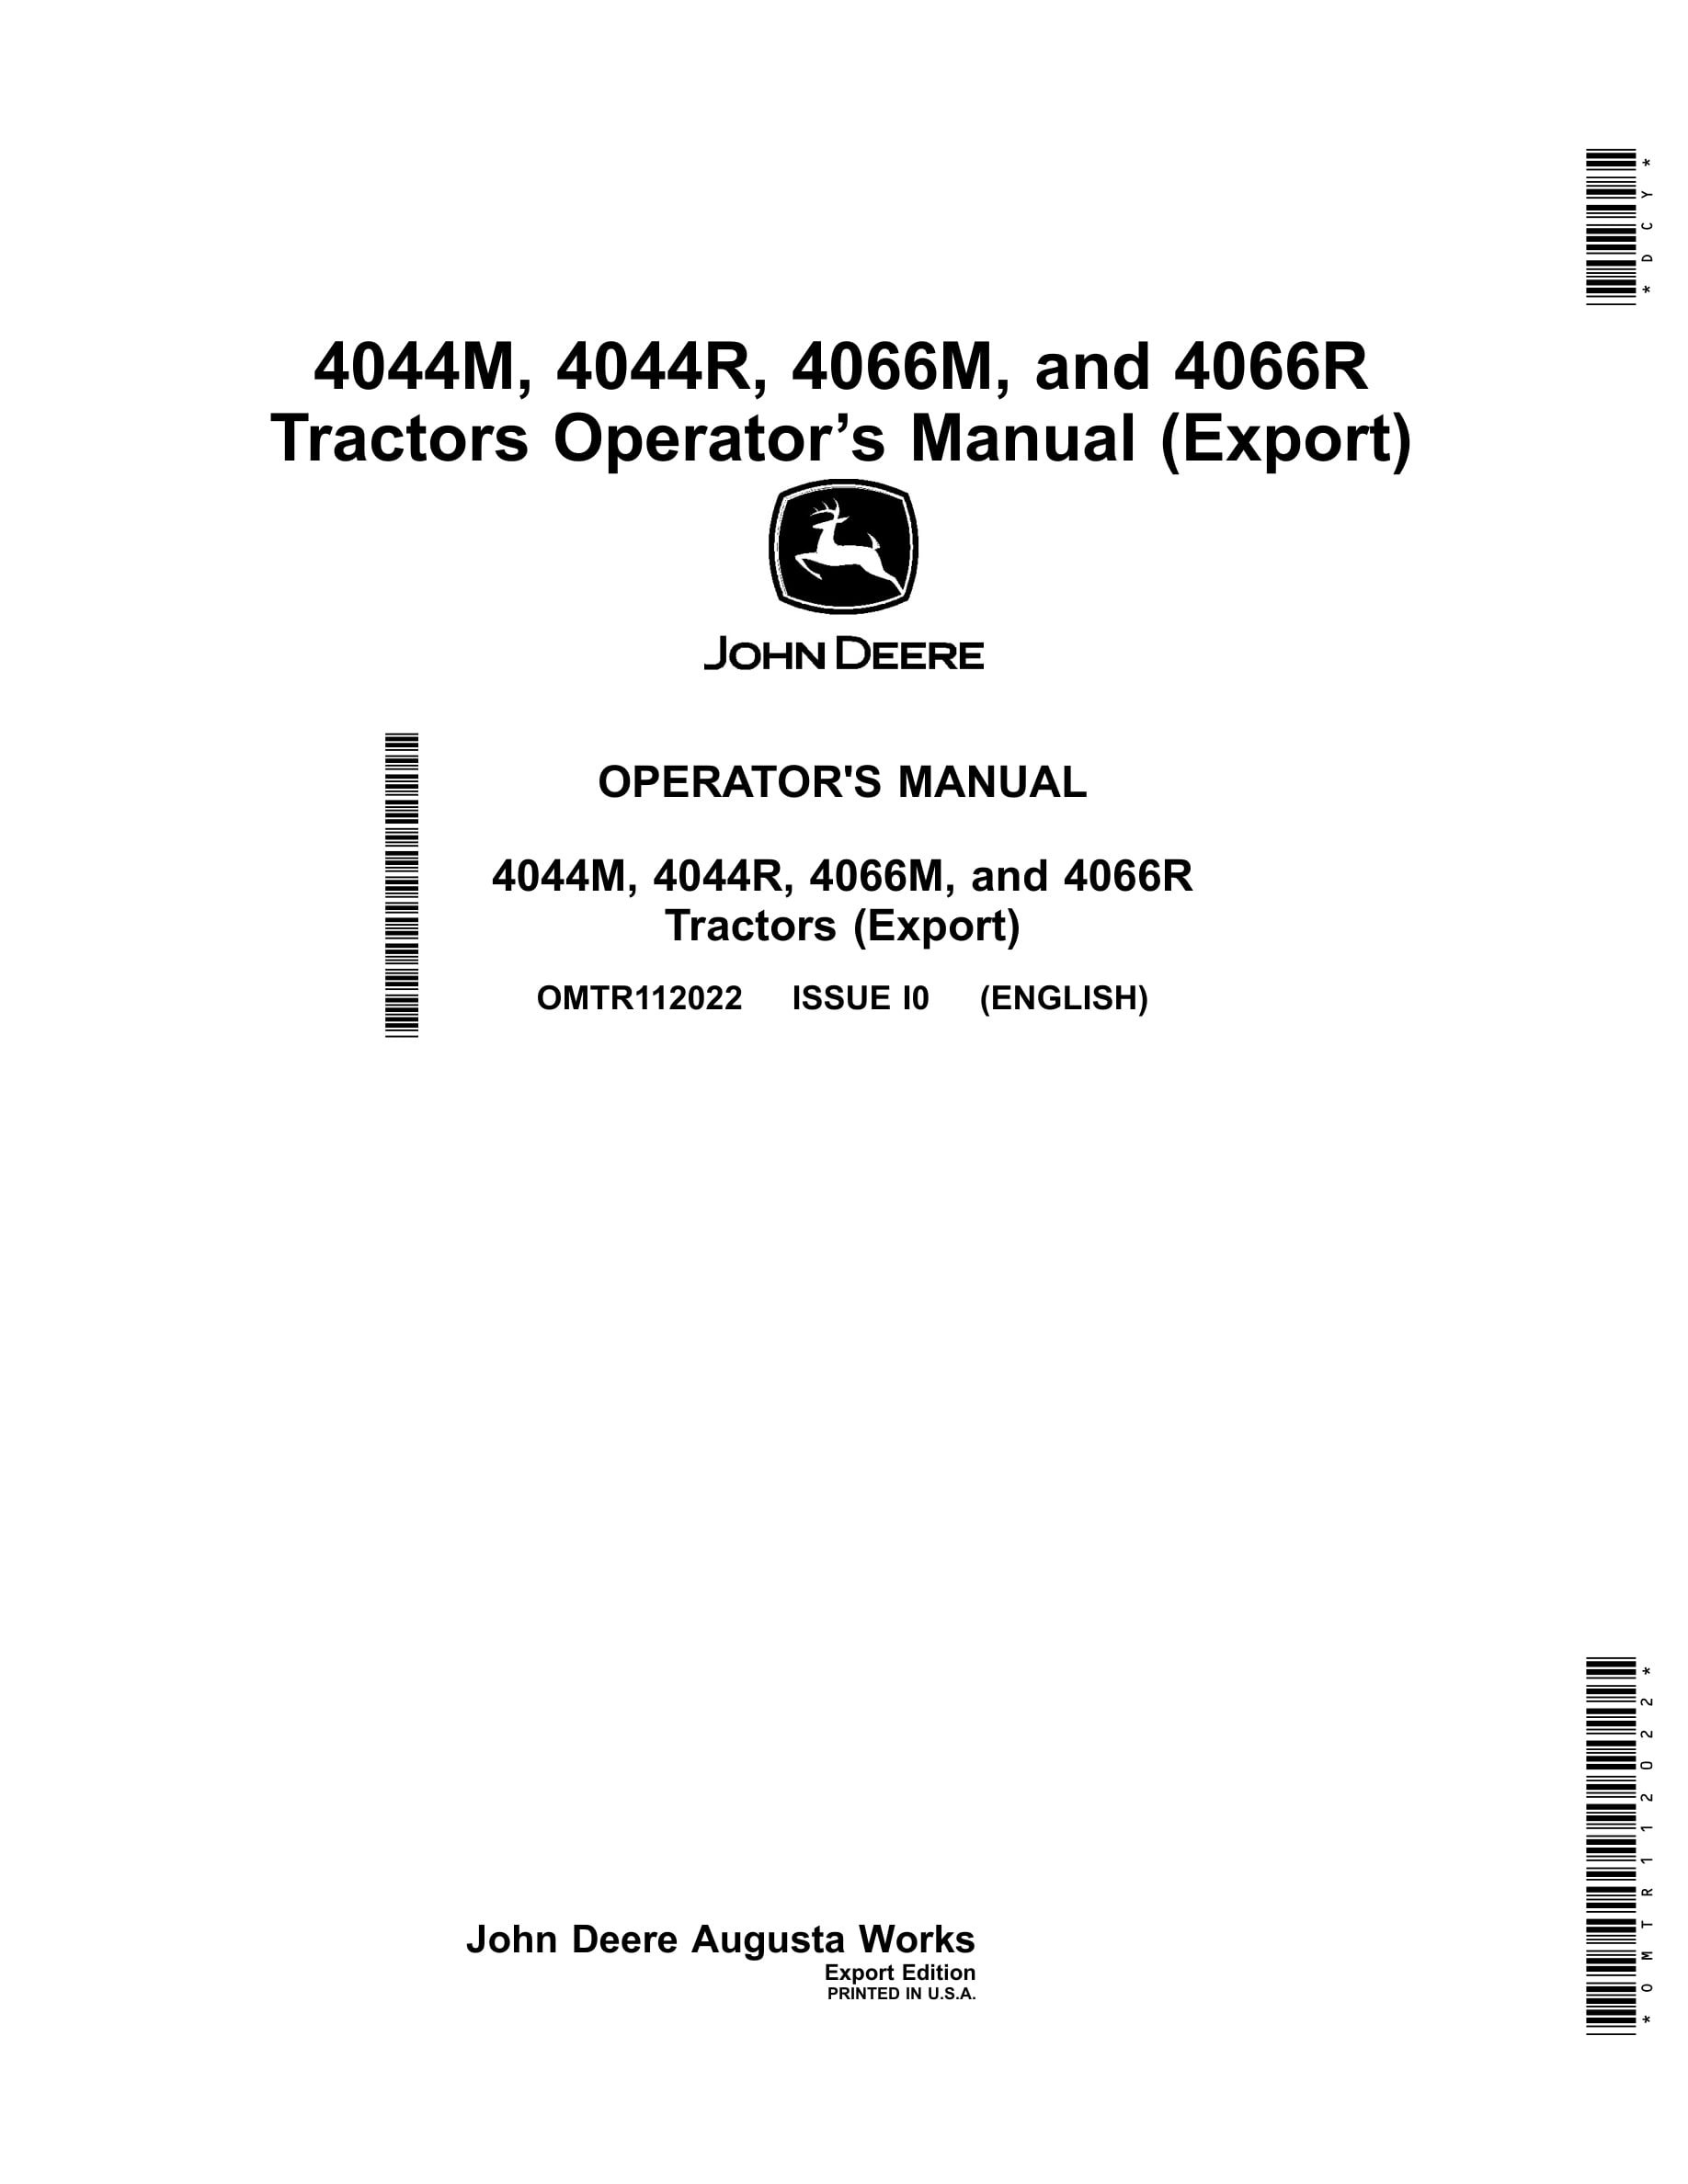 John Deere 4044m, 4044r, 4066m, And 4066r Tractors Operator Manuals OMTR112022-1